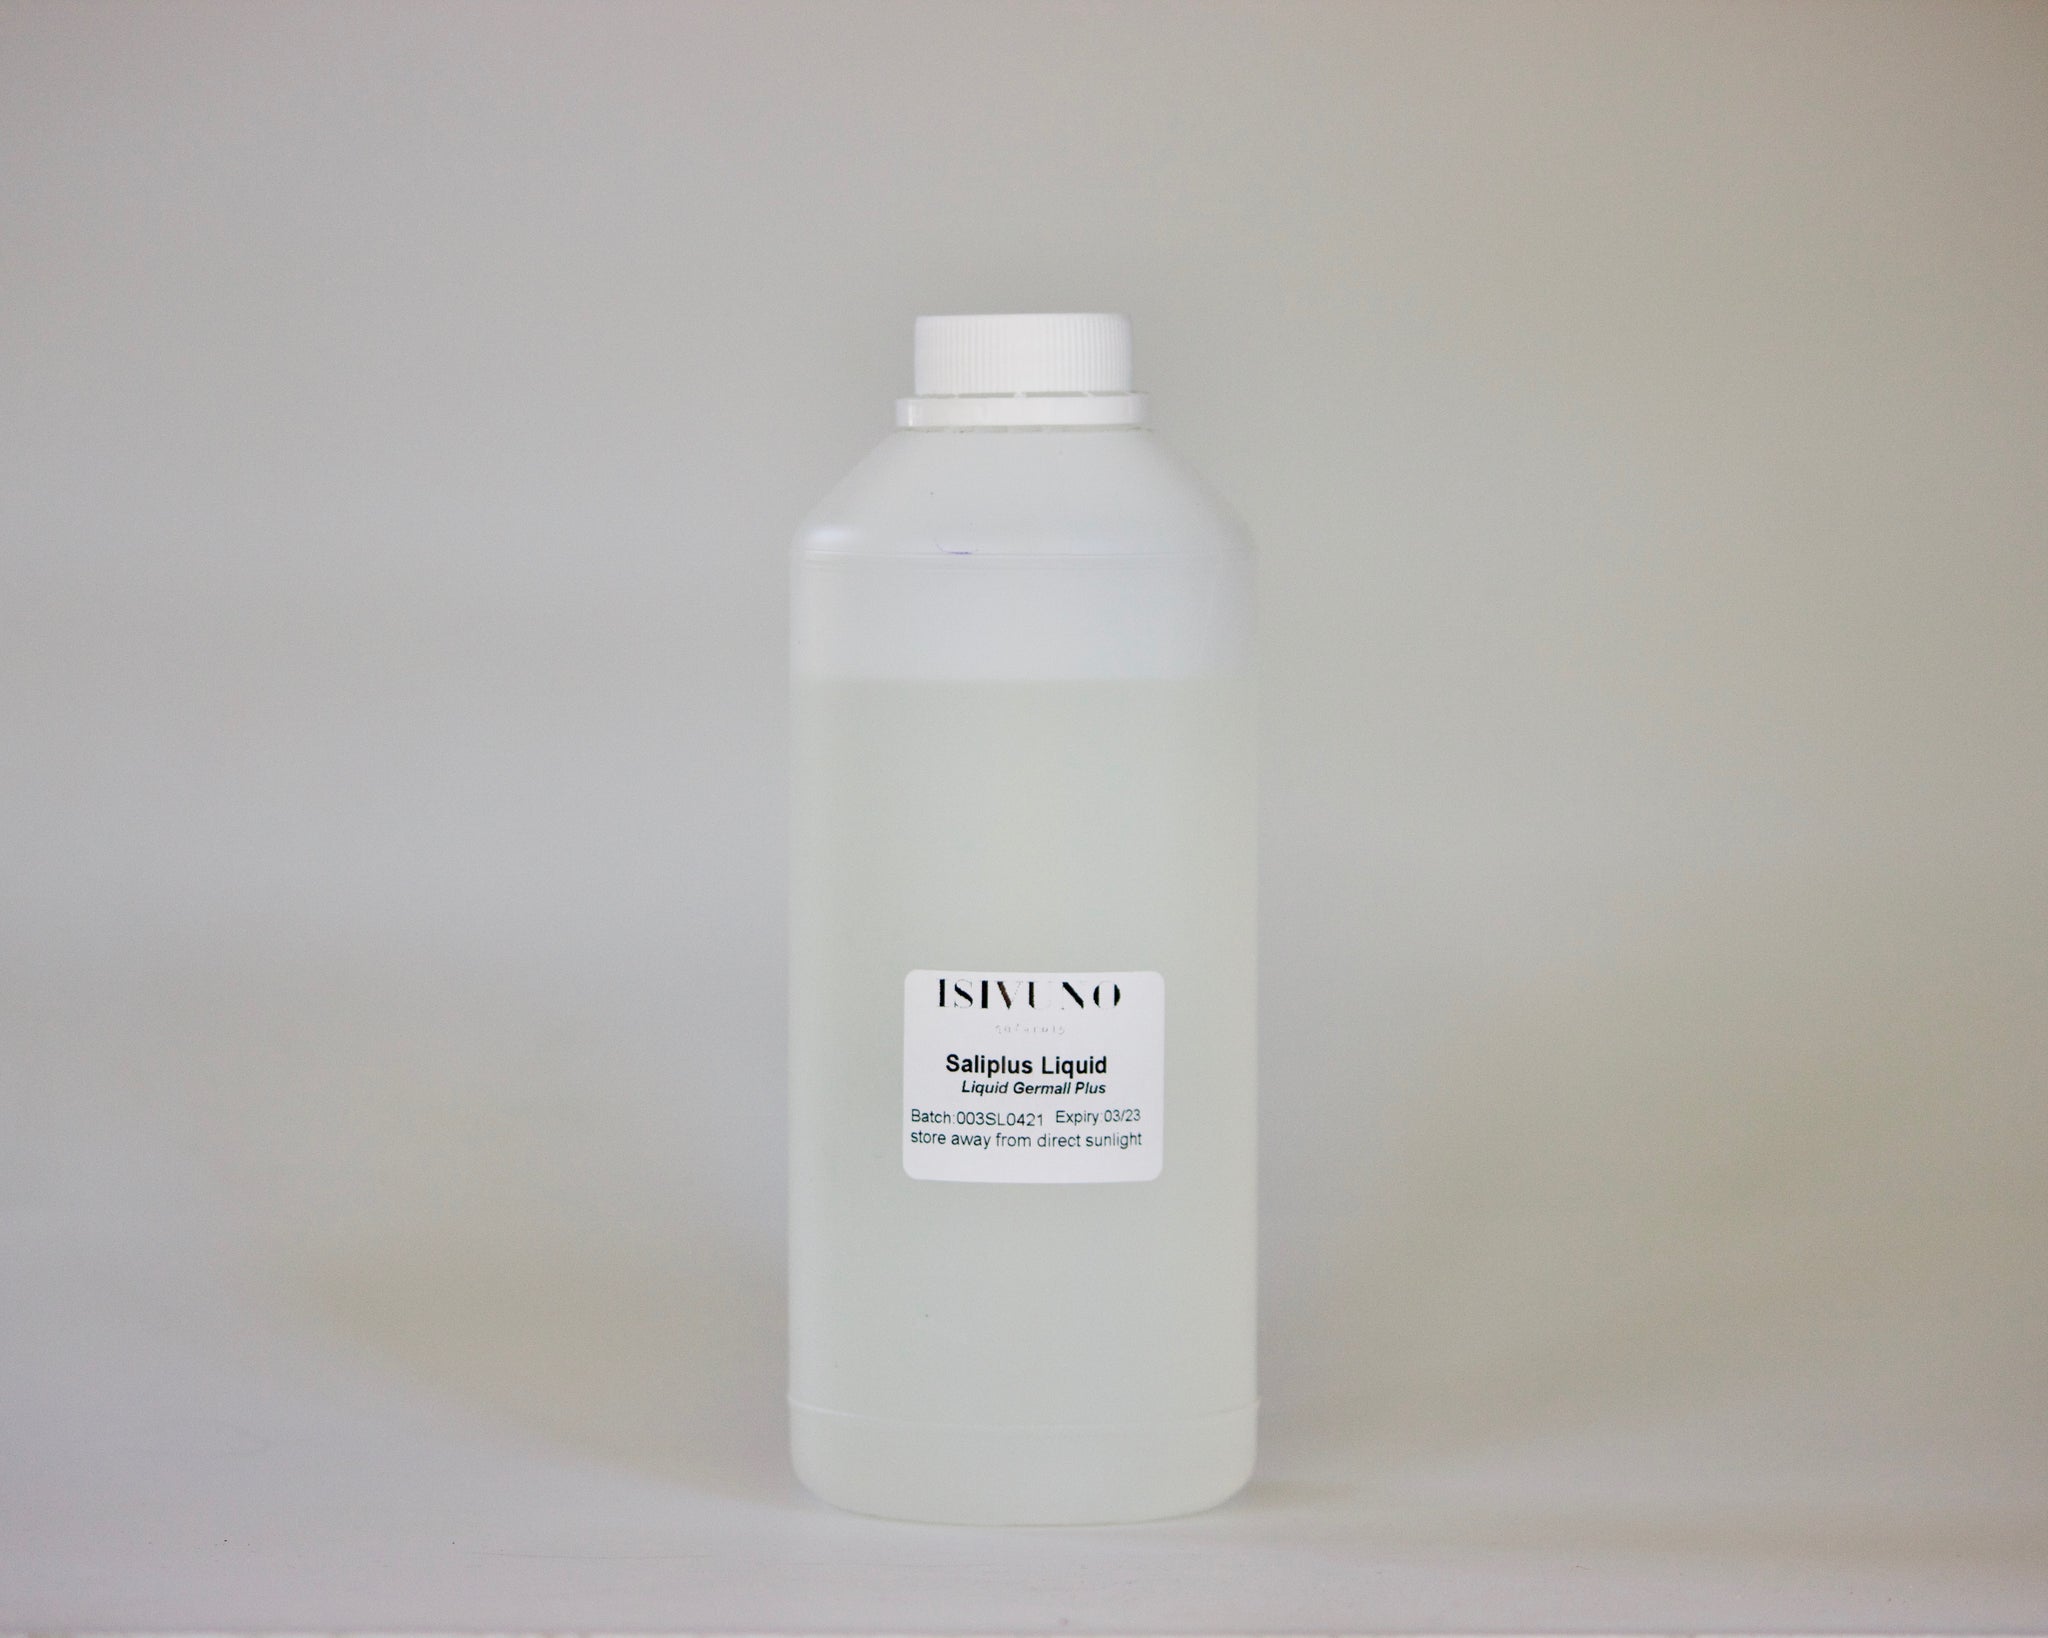 Sell jm-plus(liquid germall plus)(id:3365263) from Taicang Yanlin Chemical  Works - EC21 Mobile